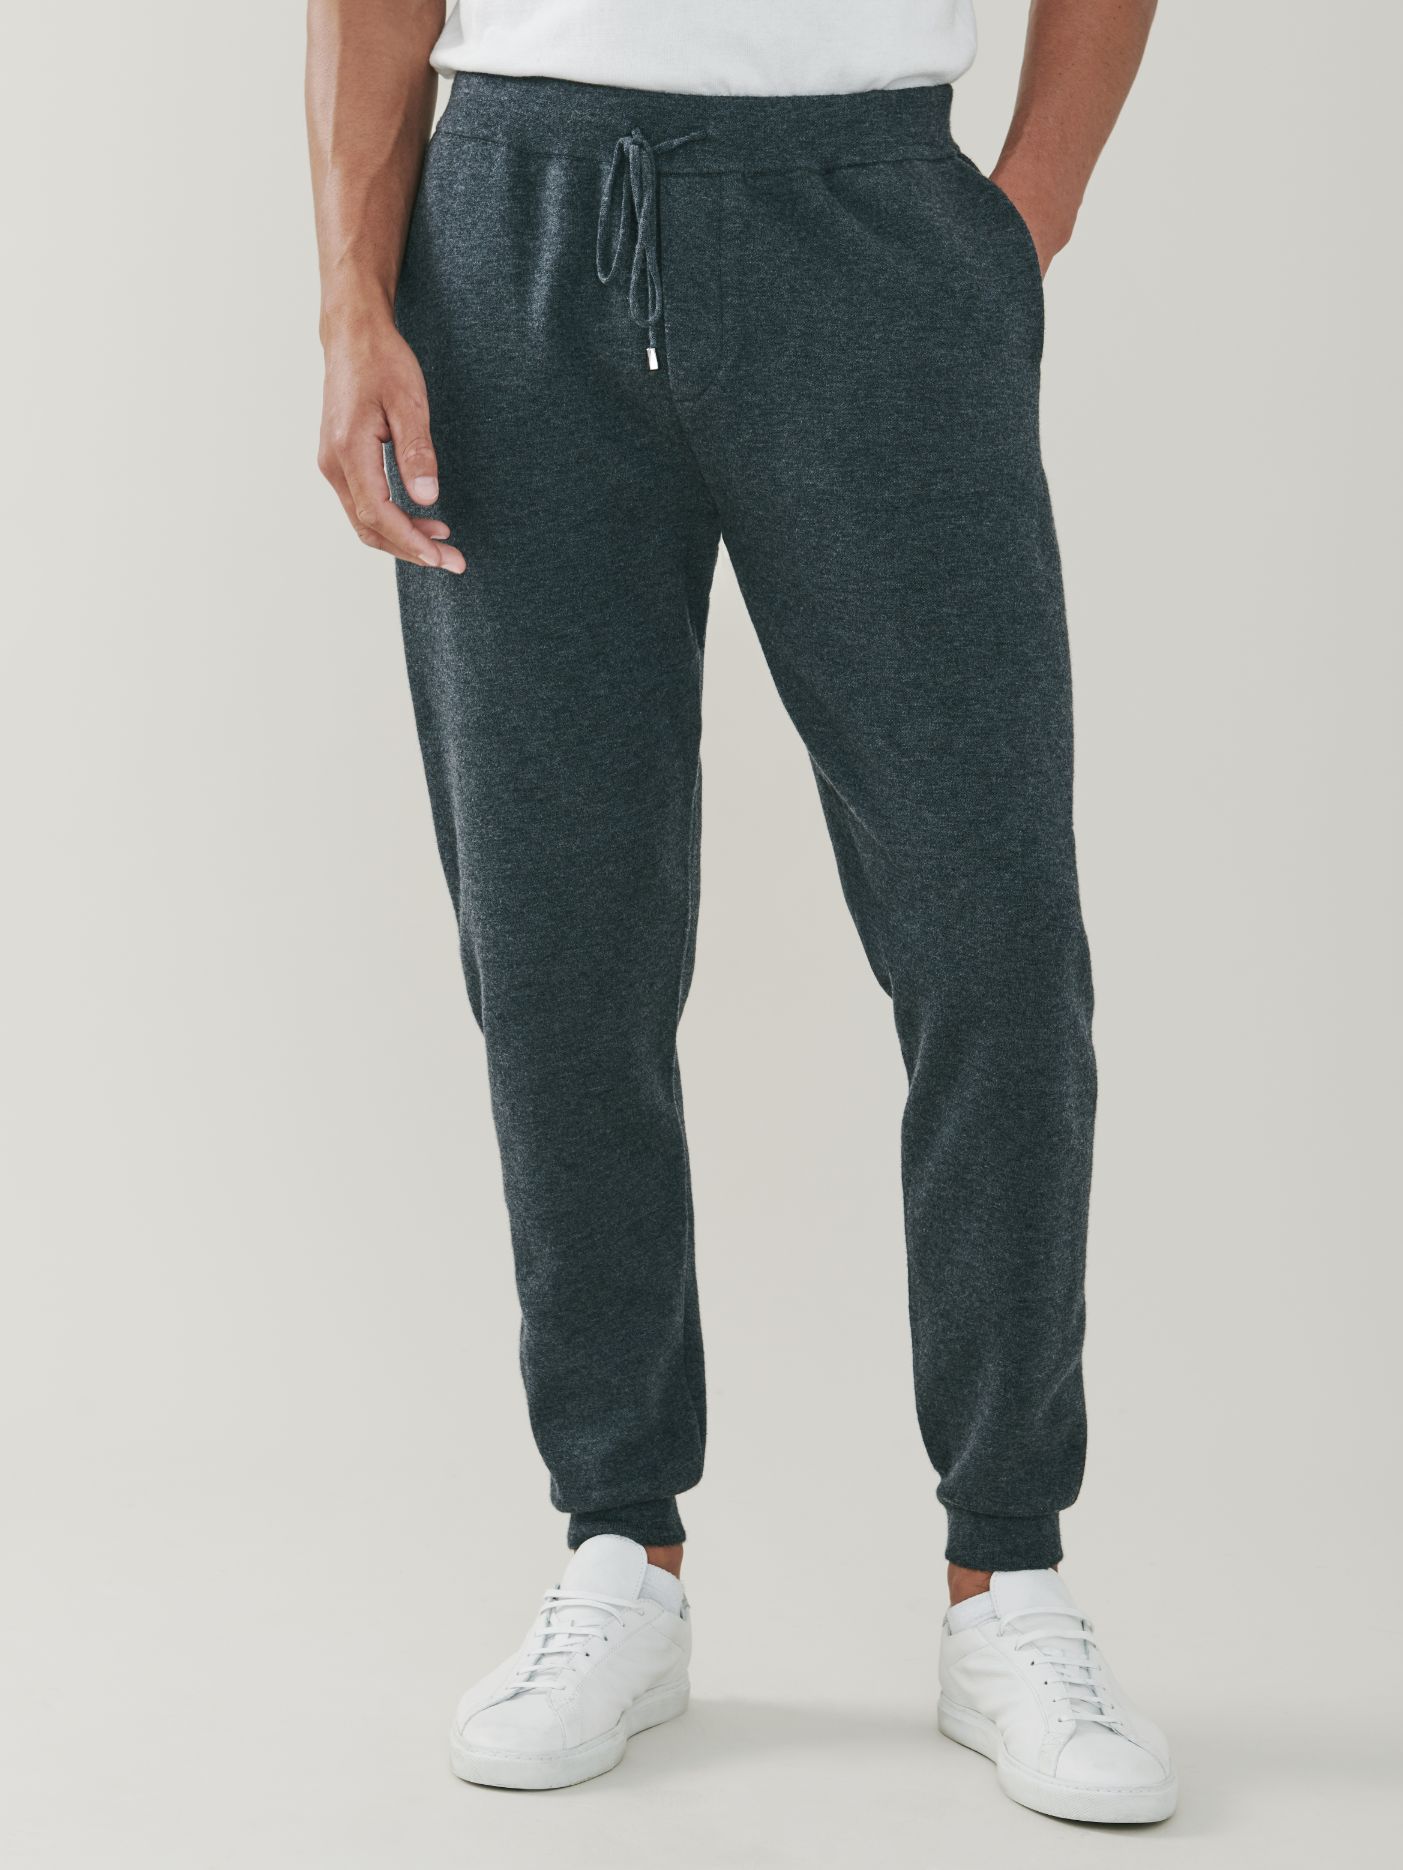 Dark Grey Sweatpants With Hamsa -  Canada